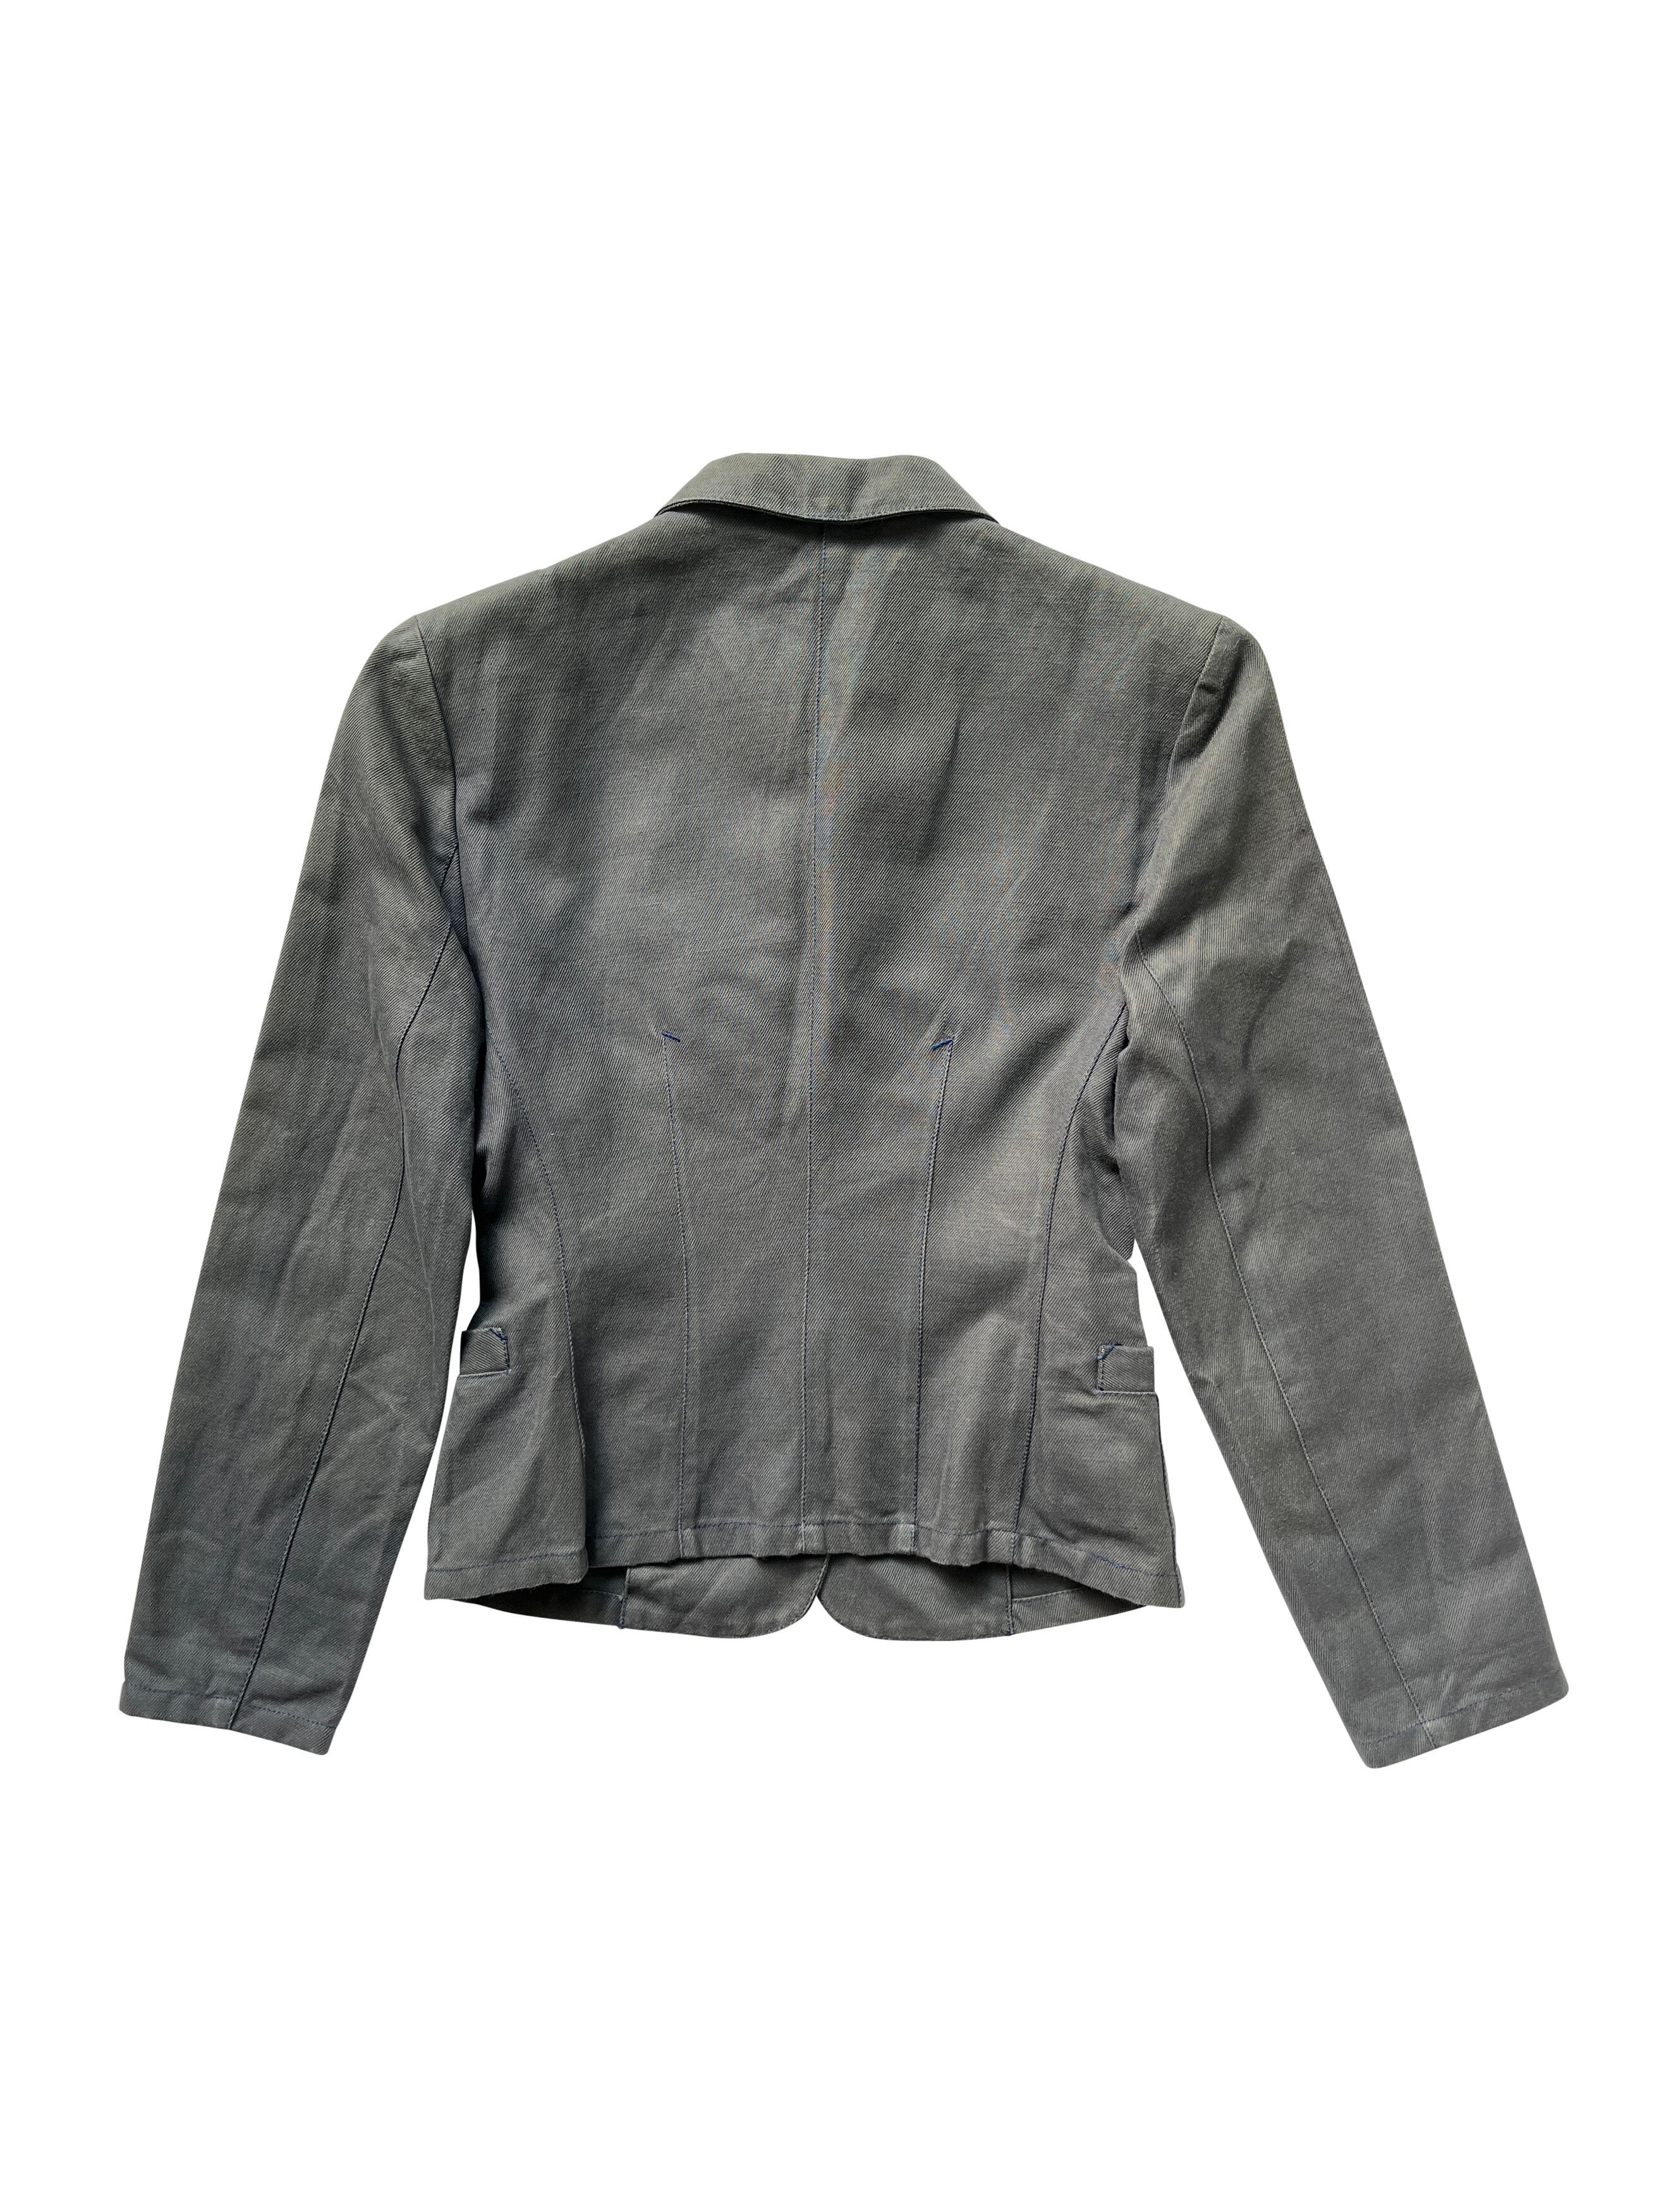 Jean Paul Gaultier ⚡️QUICK SALE⚡️1980s' Jean Paul Gaultier Grey Jacket Size S / US 4 / IT 40 - 2 Preview